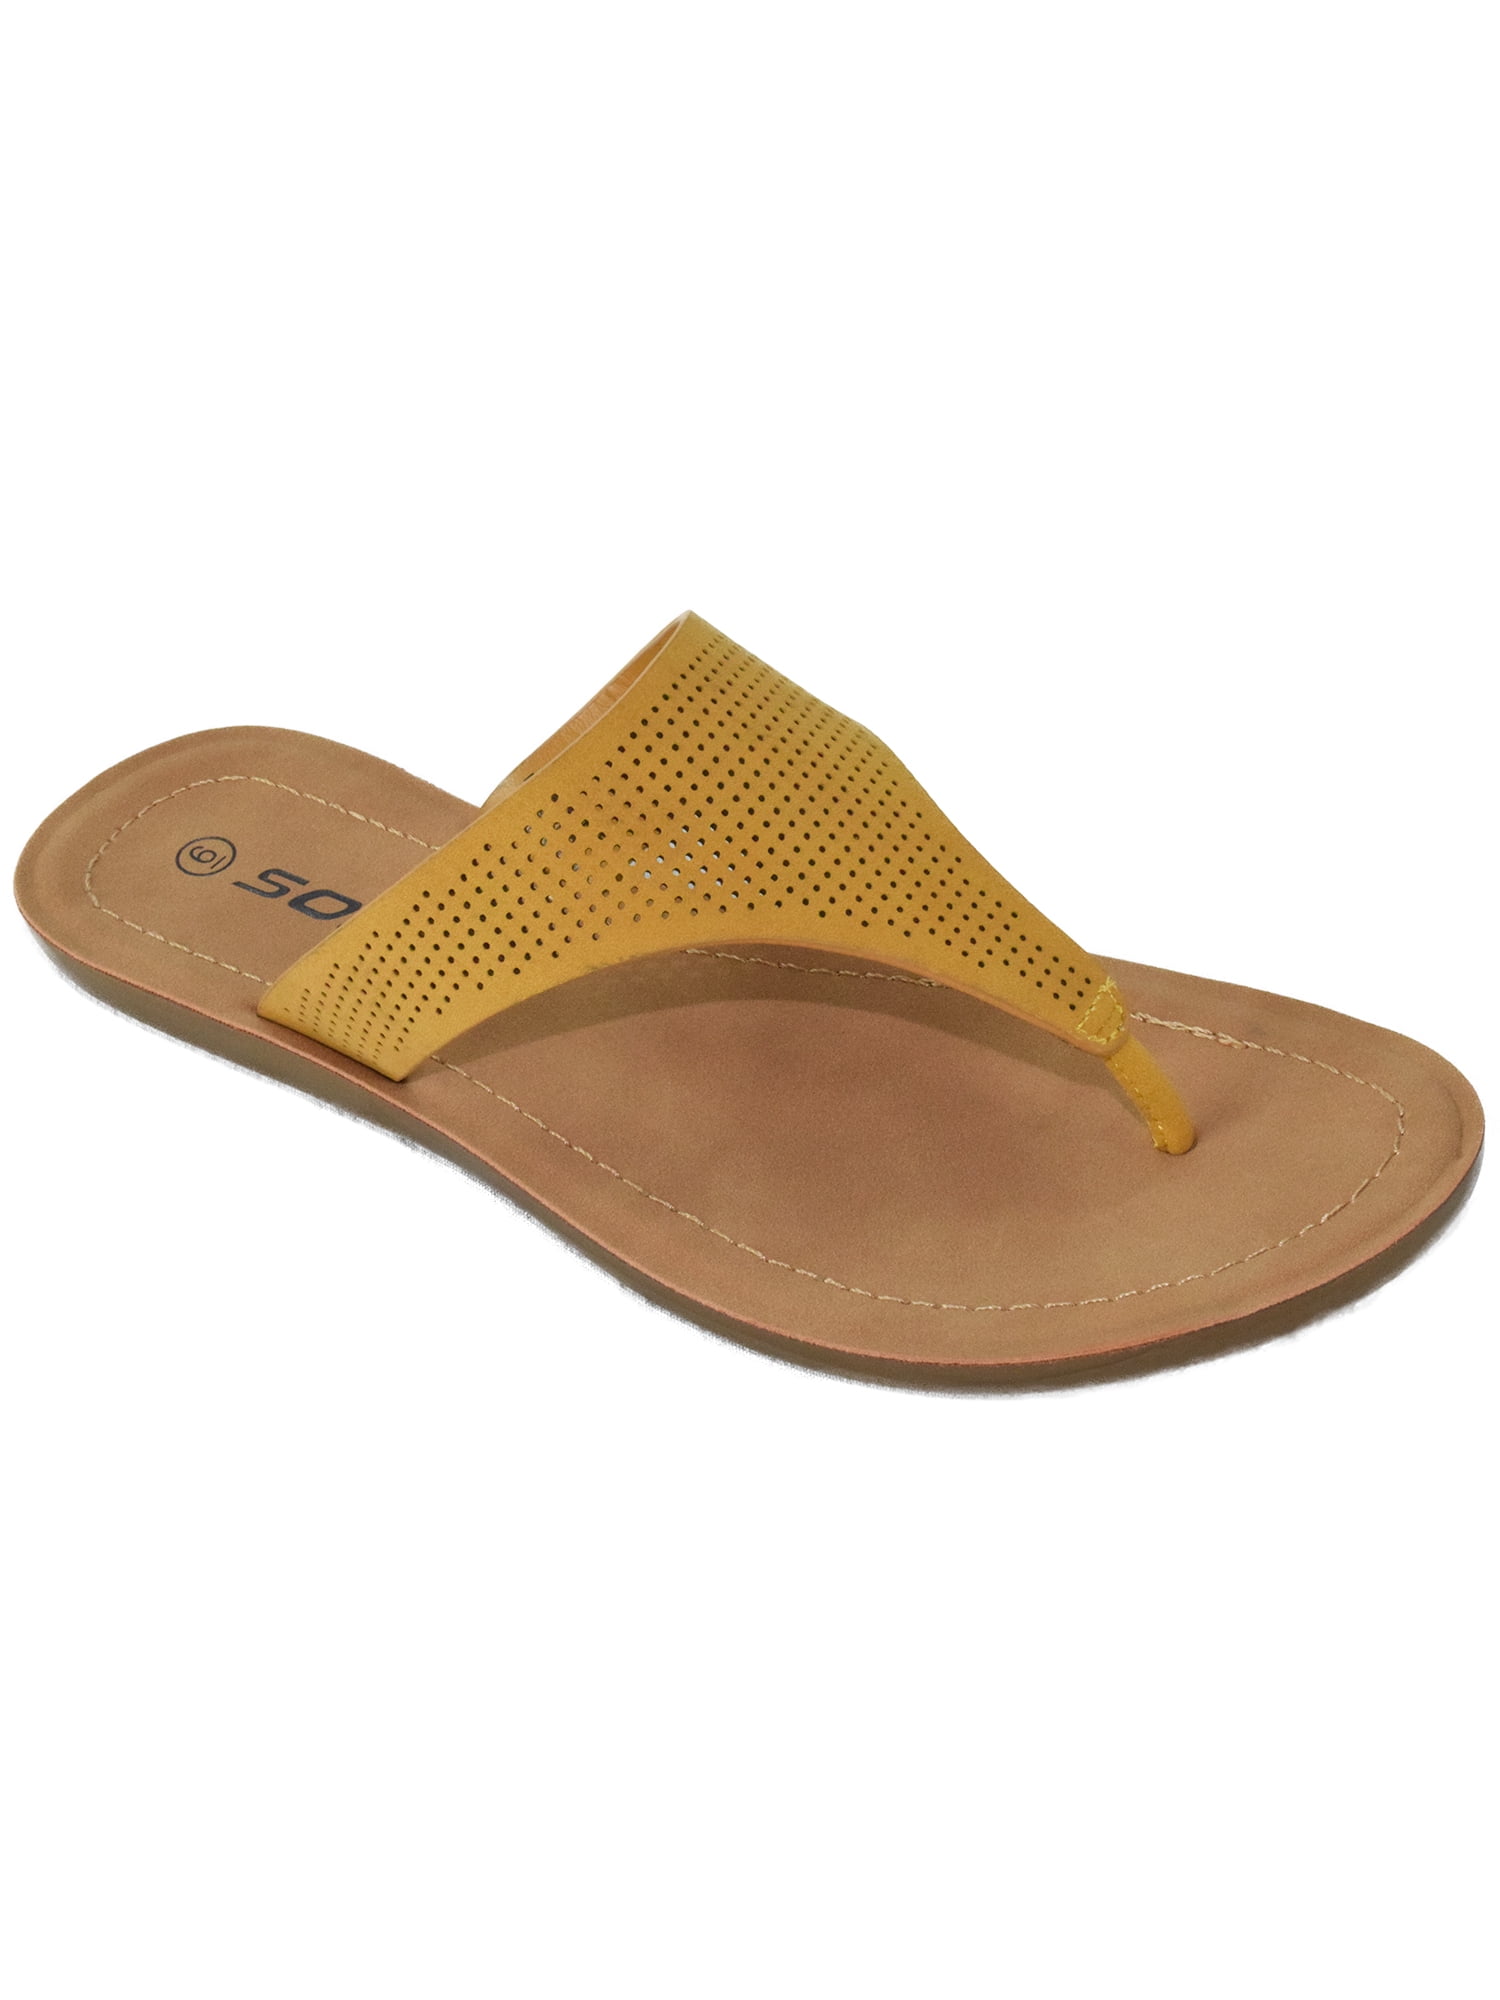 PARAGON Vertex Men's Mustard Brown Flip-Flops Foot Sandal Formal Flat Heel 